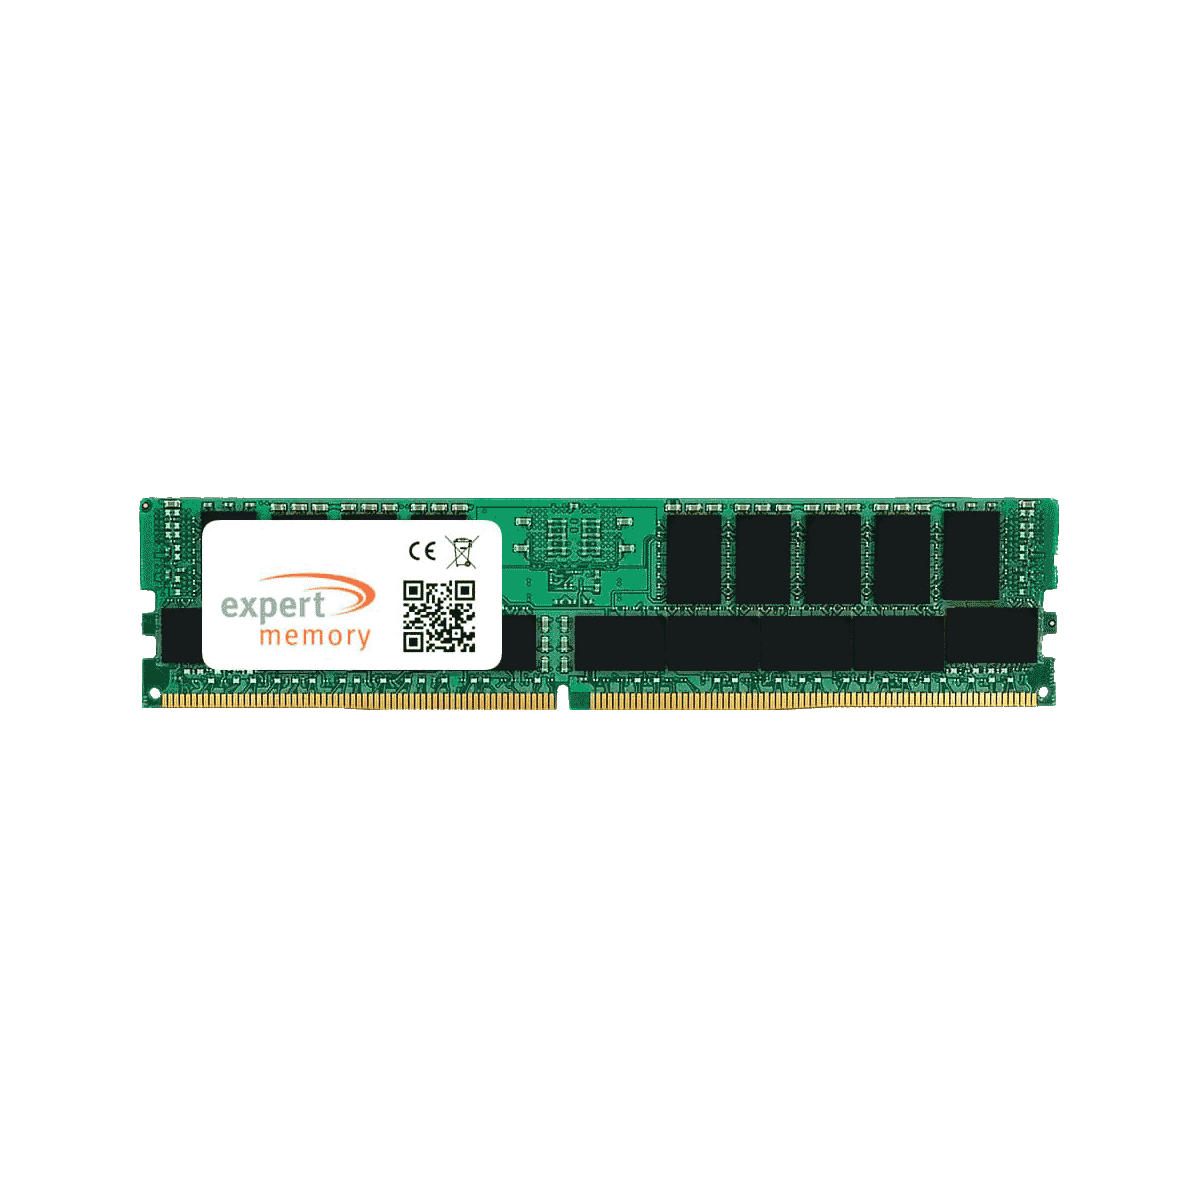 RAM Memory 64 DDR4 64GB 2133 Gen9 GB MEMORY HP XL170r 4Rx4 LRDIMM Server ProLiant Upgrade EXPERT